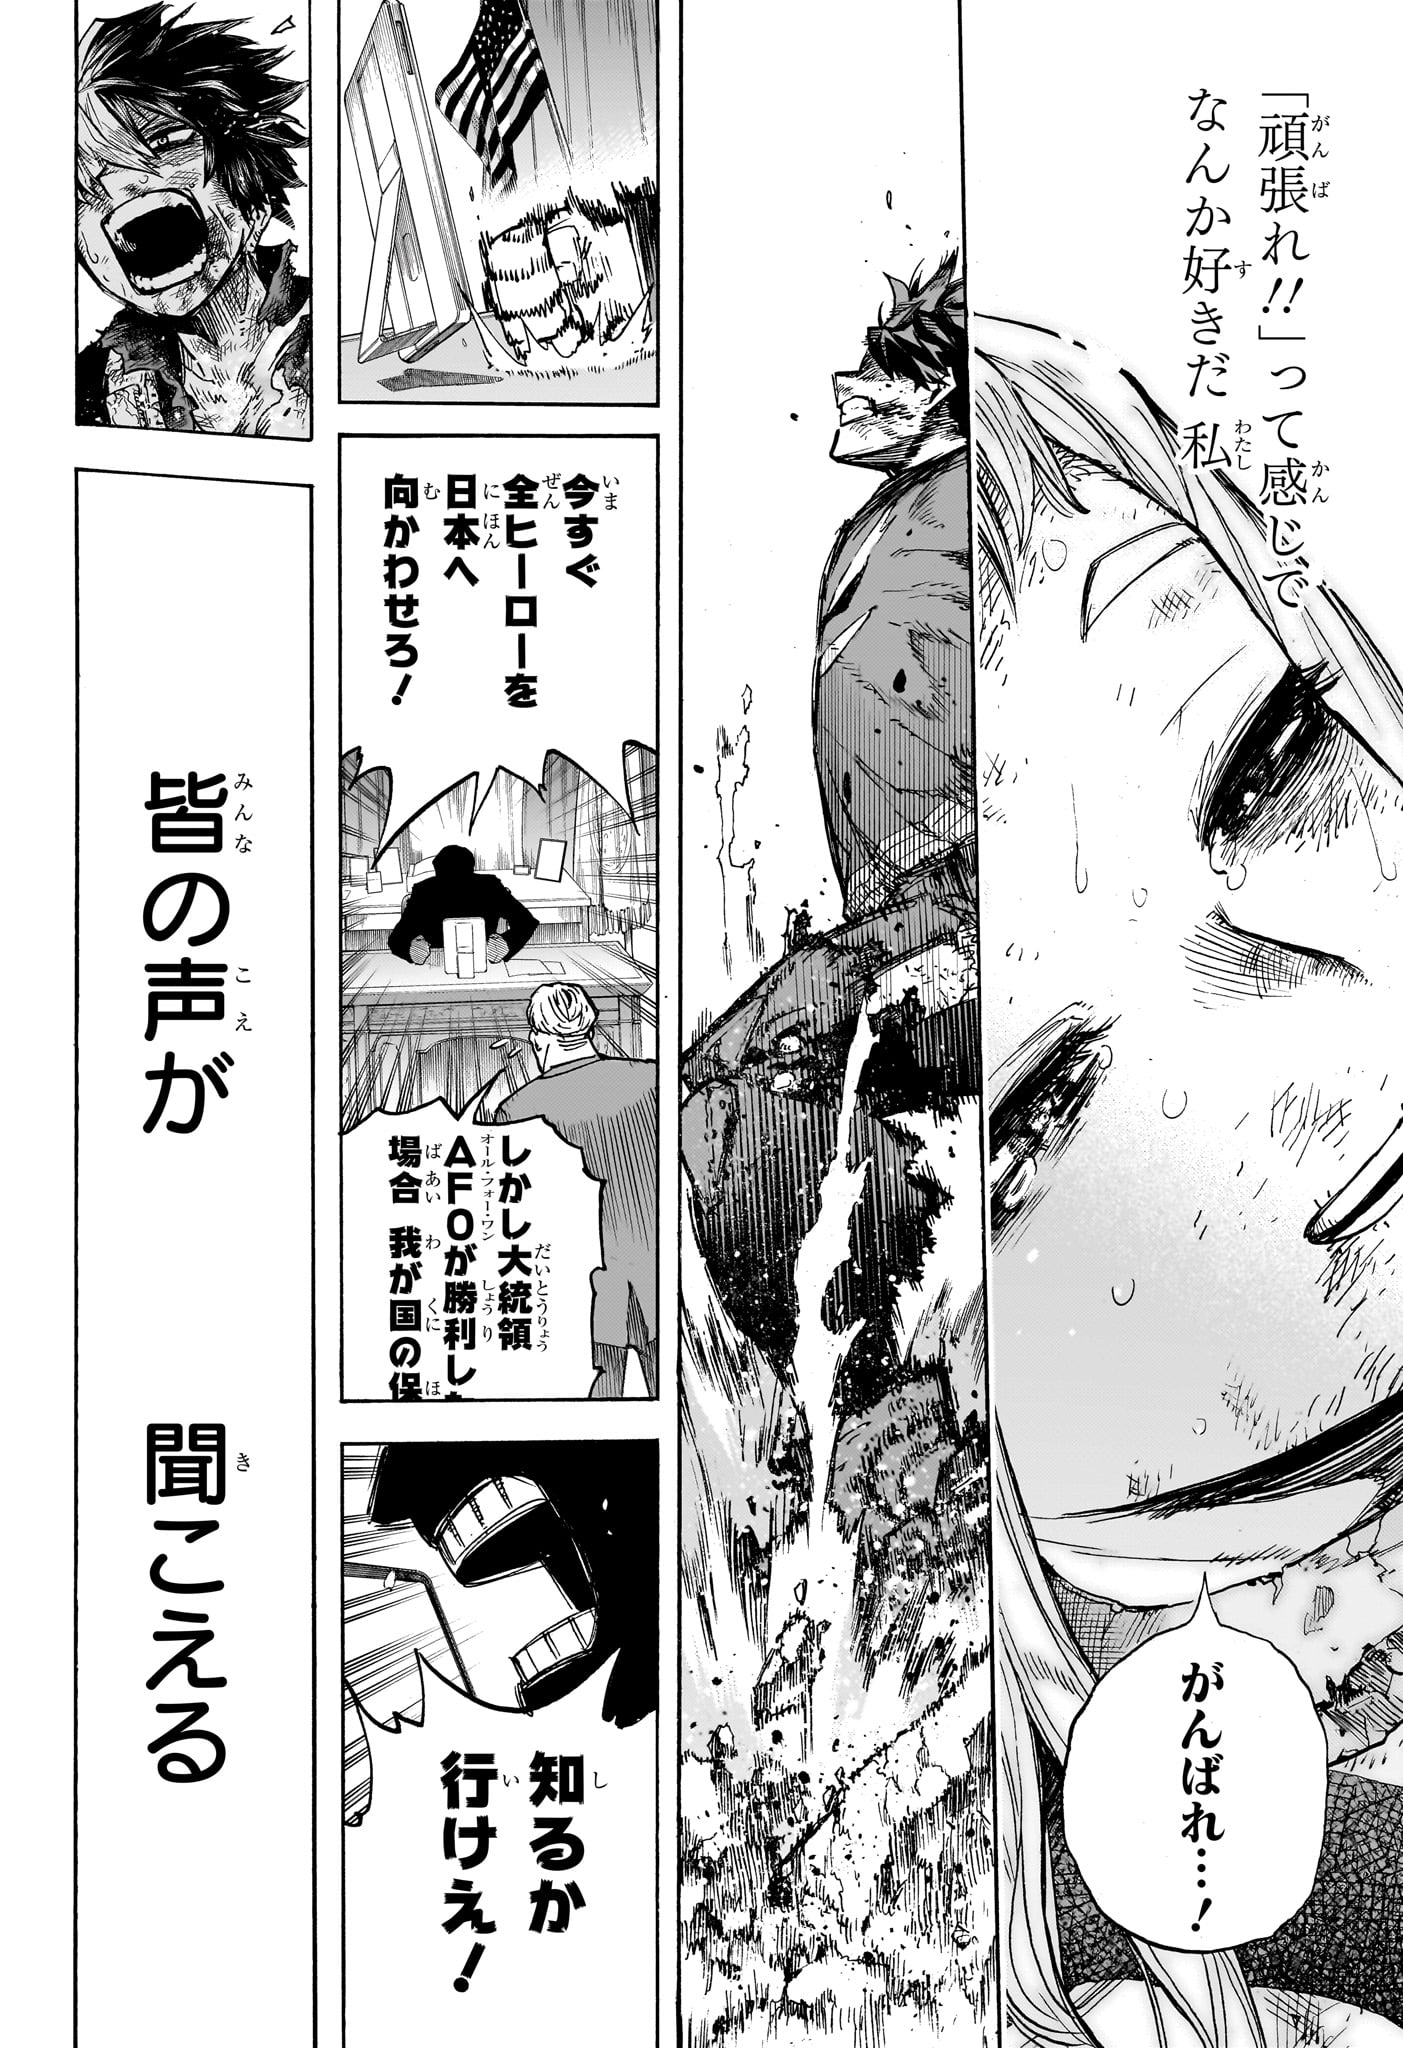 Boku no Hero Academia - Chapter 422 - Page 12